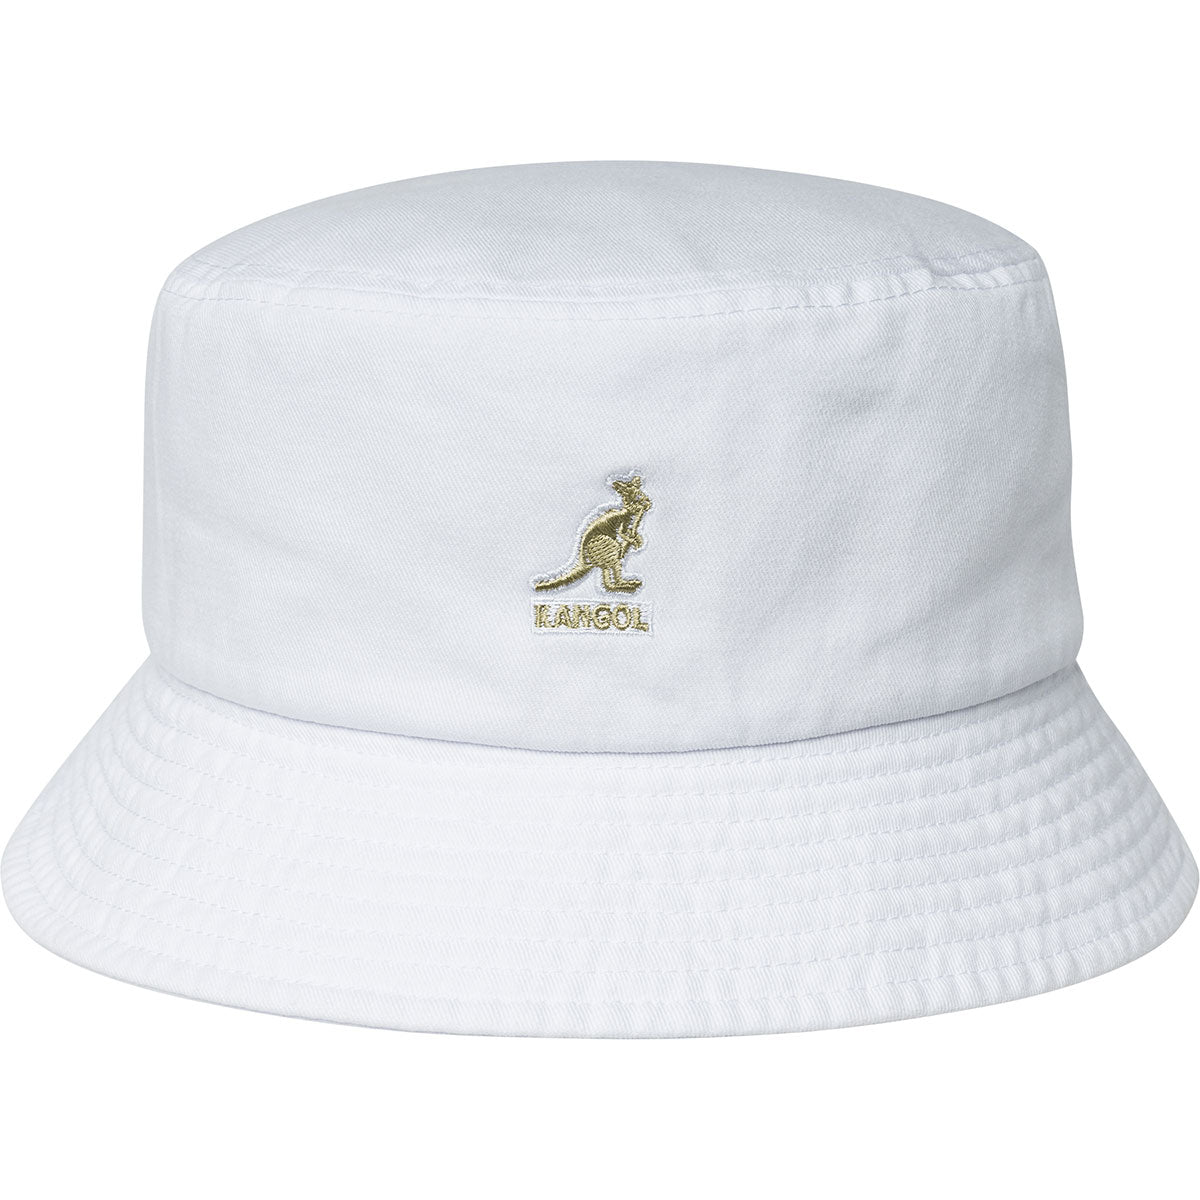 Washed Bucket Hat - White - Headz Up 